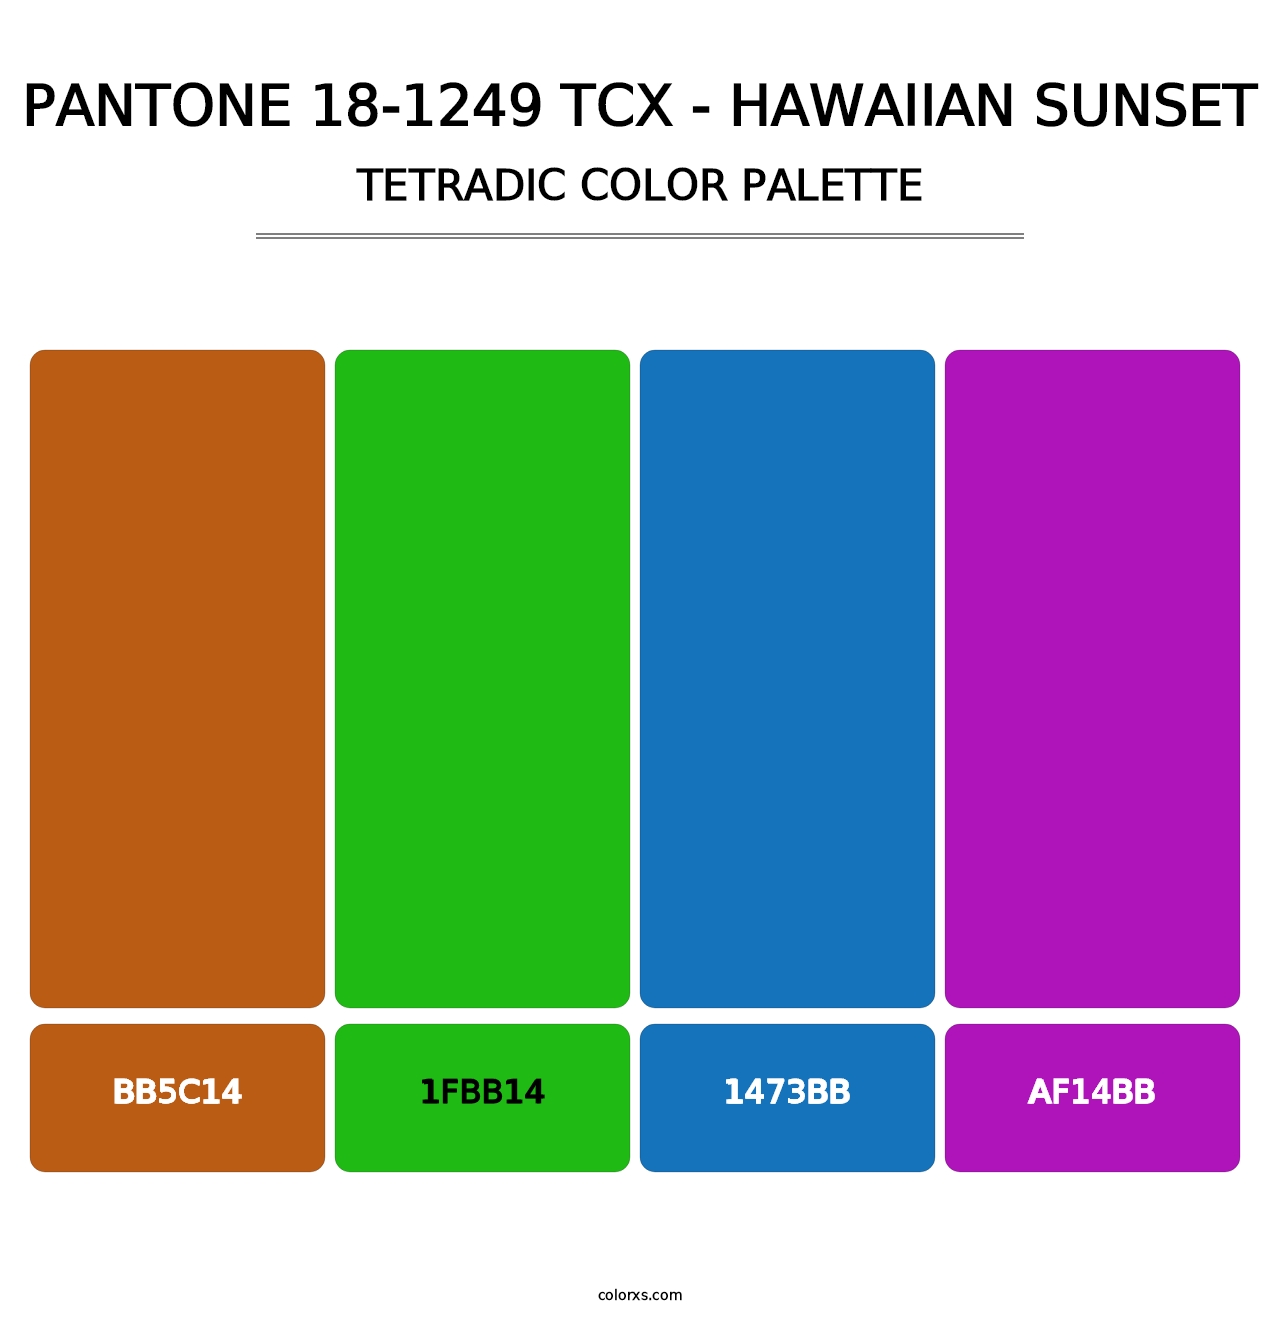 PANTONE 18-1249 TCX - Hawaiian Sunset - Tetradic Color Palette